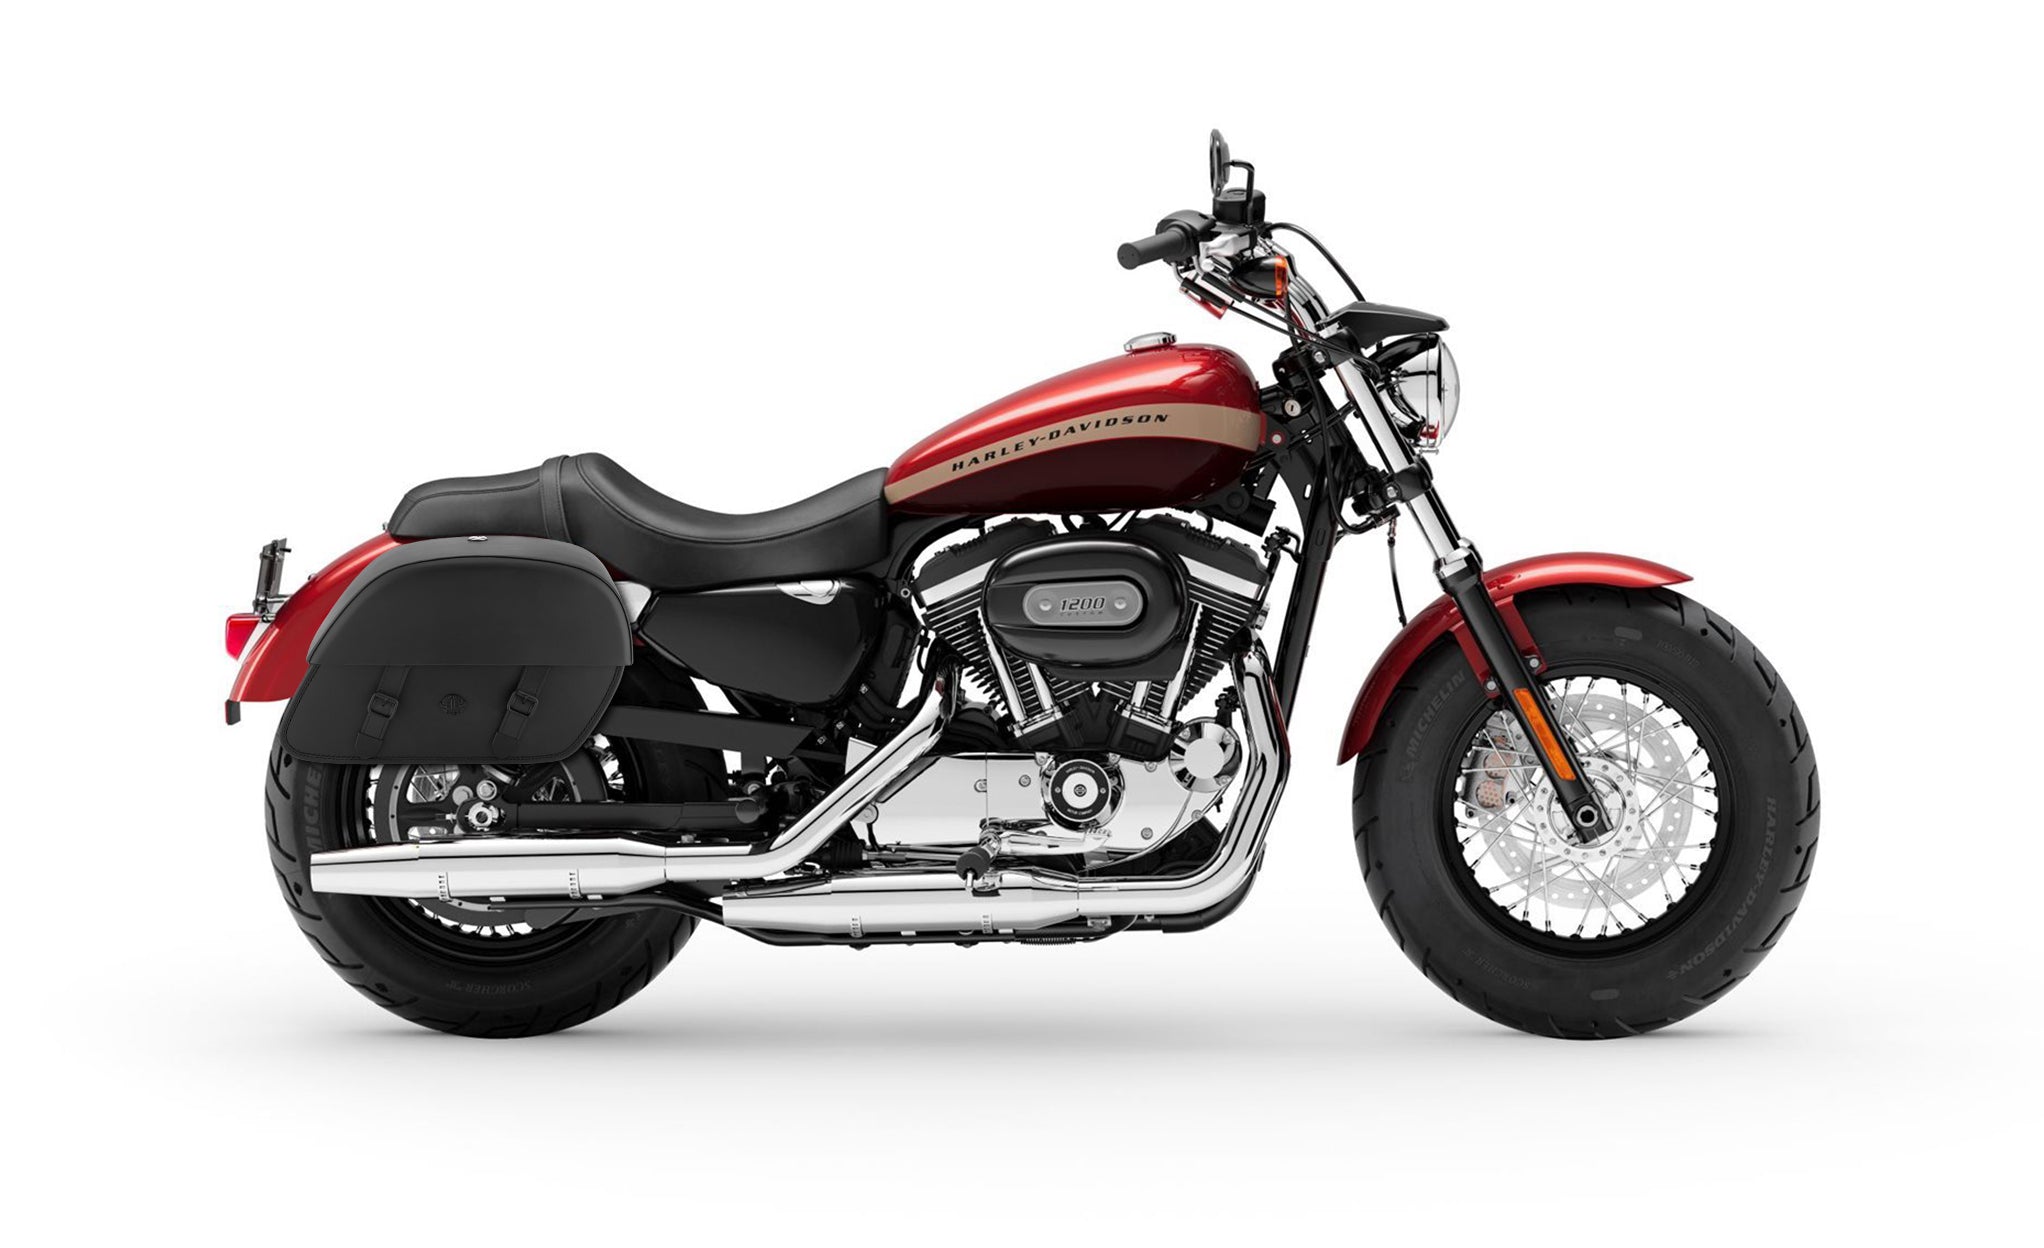 28L - Baelor Medium Quick Mount Motorcycle Saddlebags For Harley Sportster 1200 Custom XL1200C/XLH1200C @expand